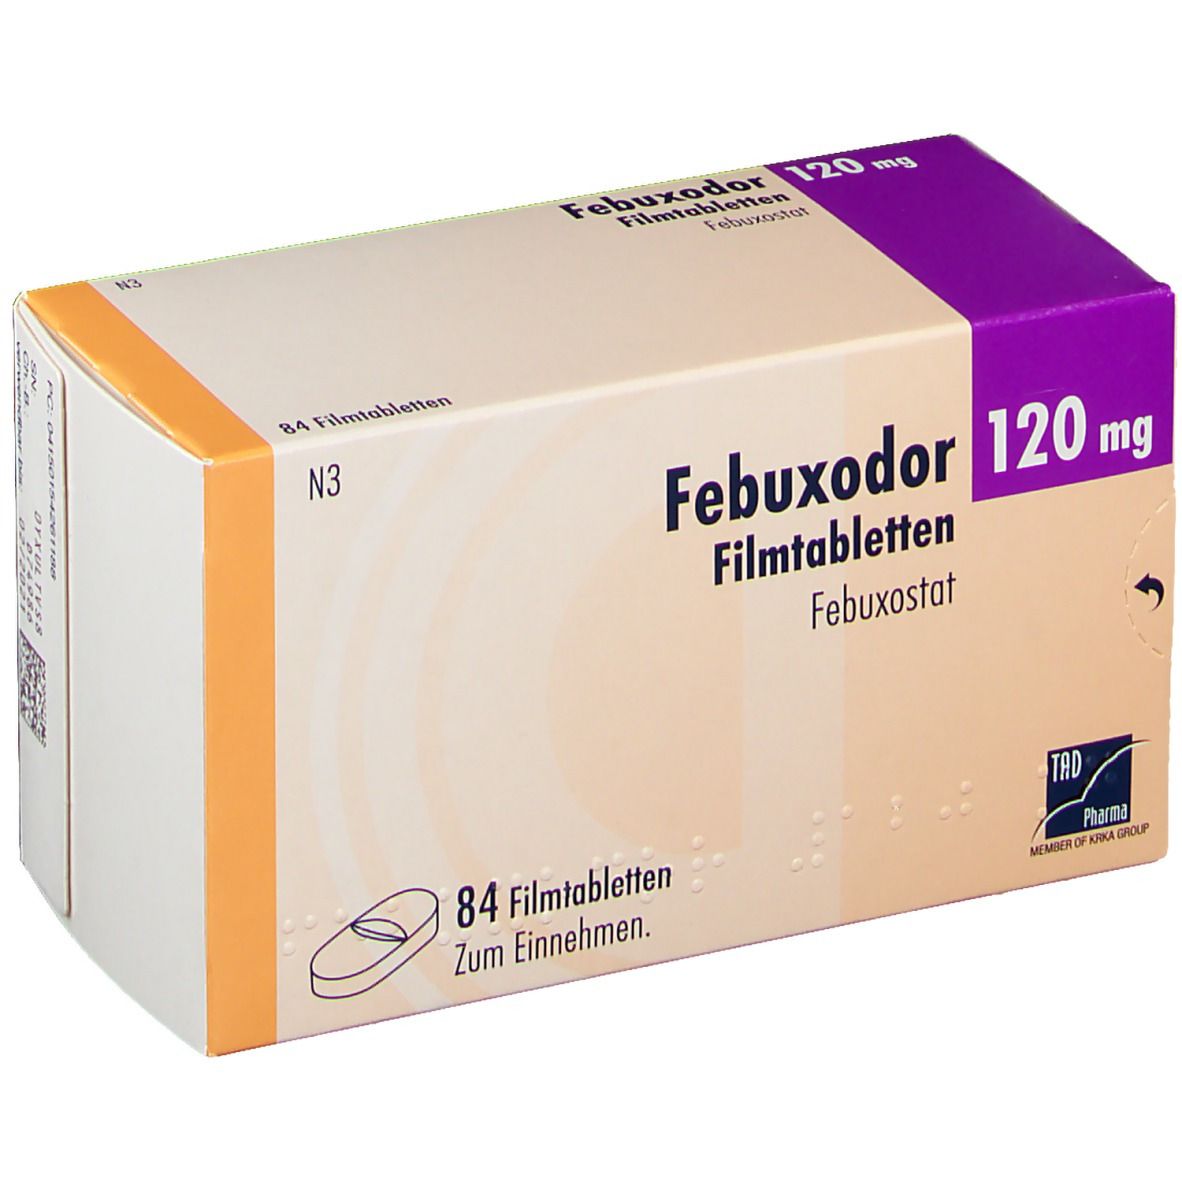 Febuxodor® 120 mg